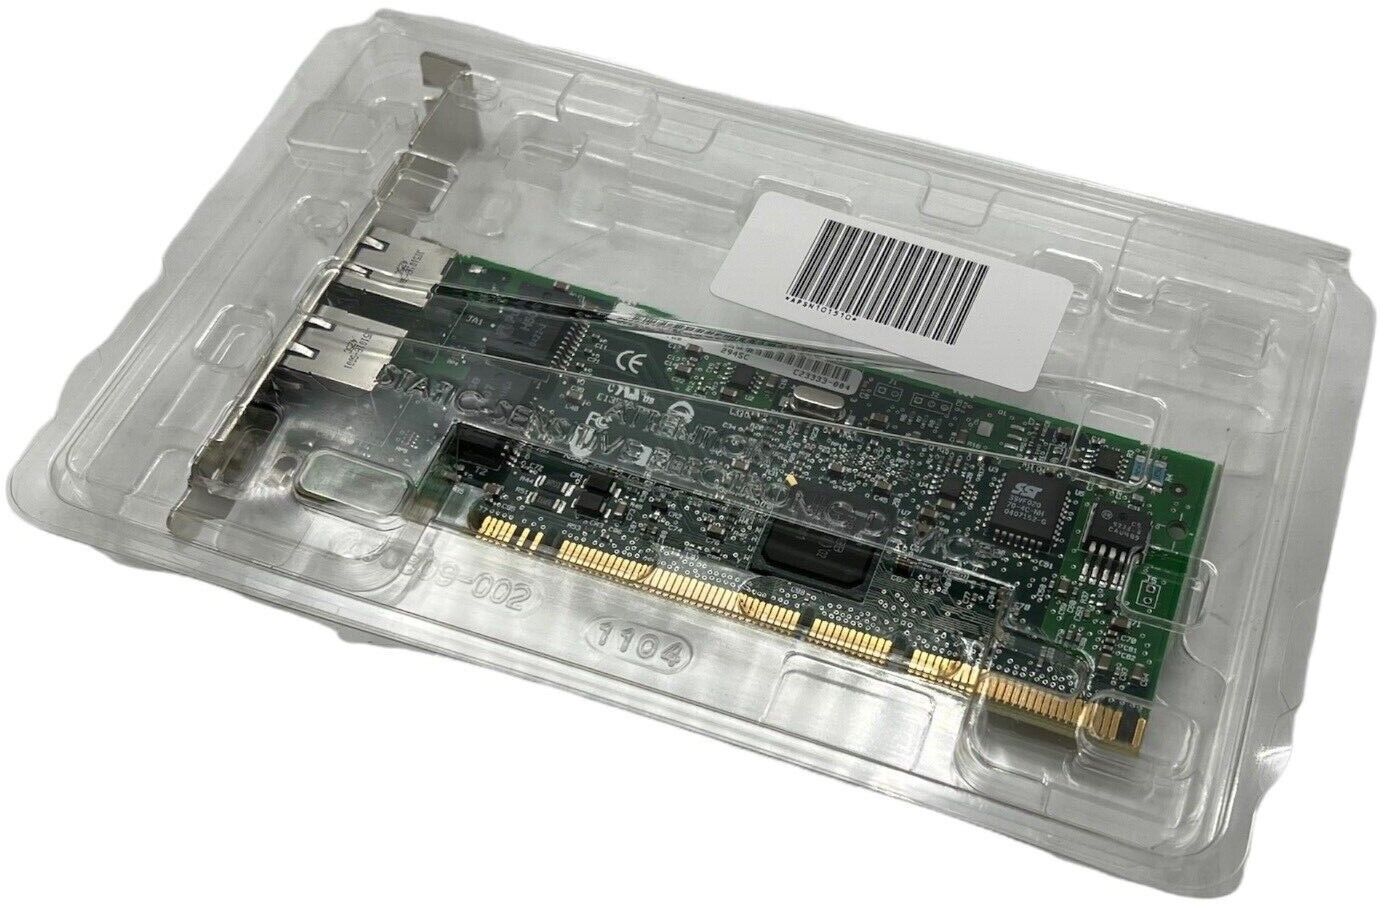 (NEW) HP NC7170 313559-001 PCI-X Gigabit Server Adapter Network Card